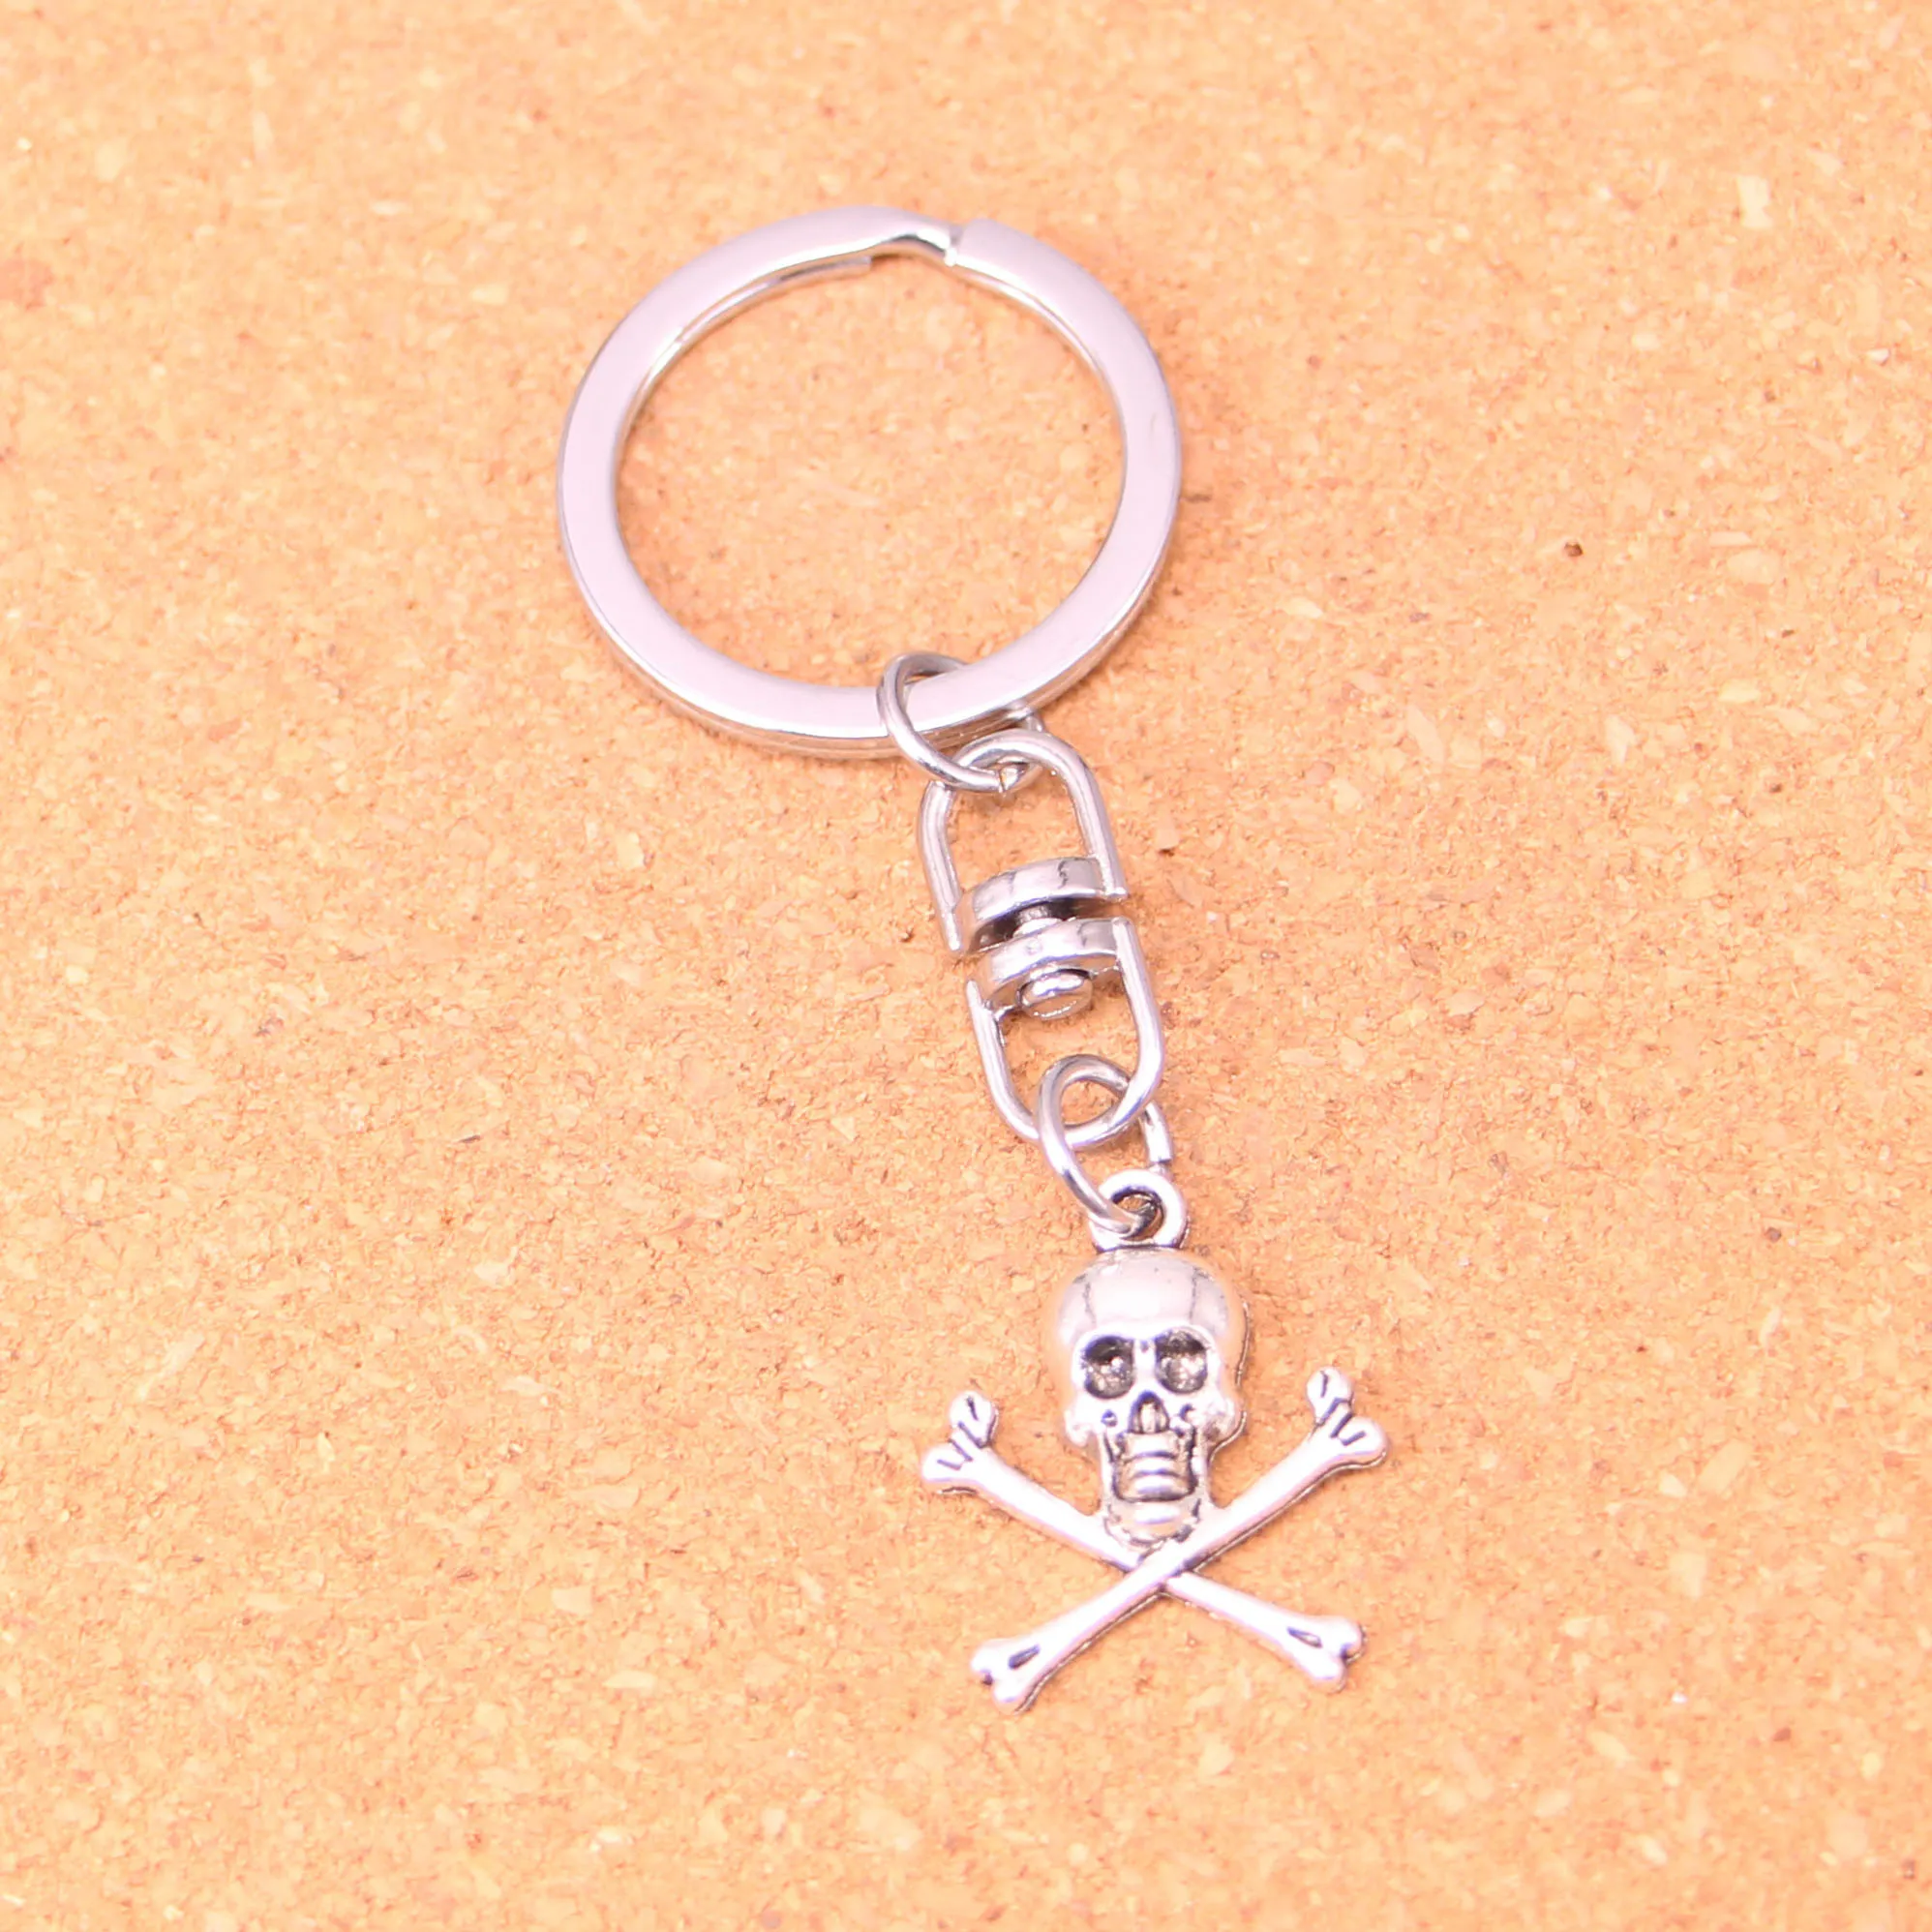 Mode sleutelhanger 24 * 19mm schedel skeleton bot hangers diy sieraden auto sleutelhanger ring houder souvenir voor gift